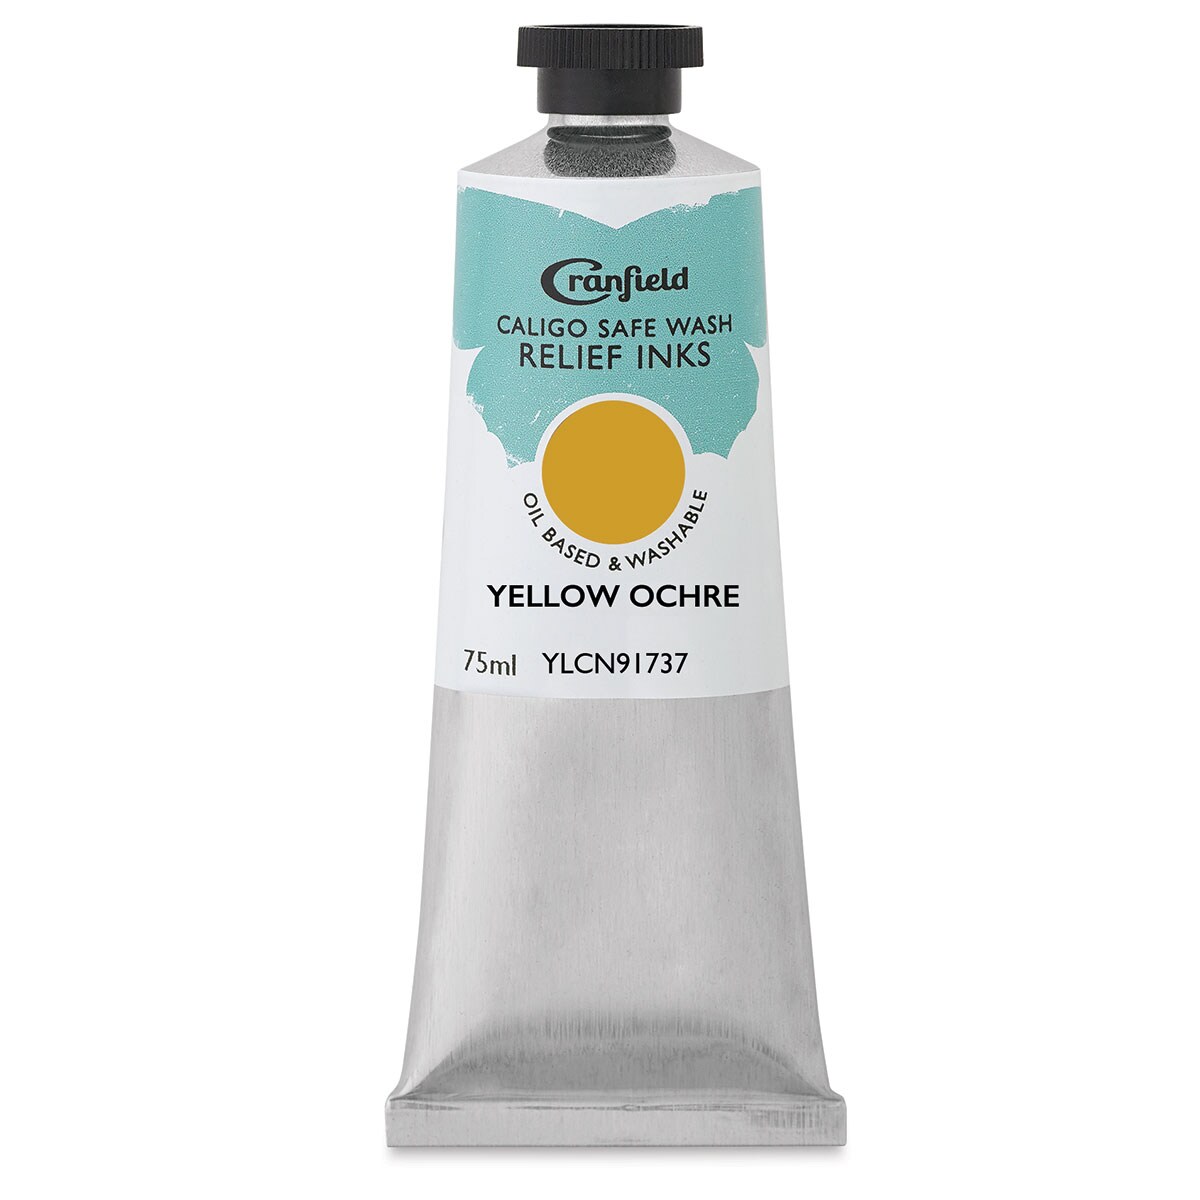 Cranfield Caligo Safe Wash Relief Ink - Yellow Ochre, 75 ml